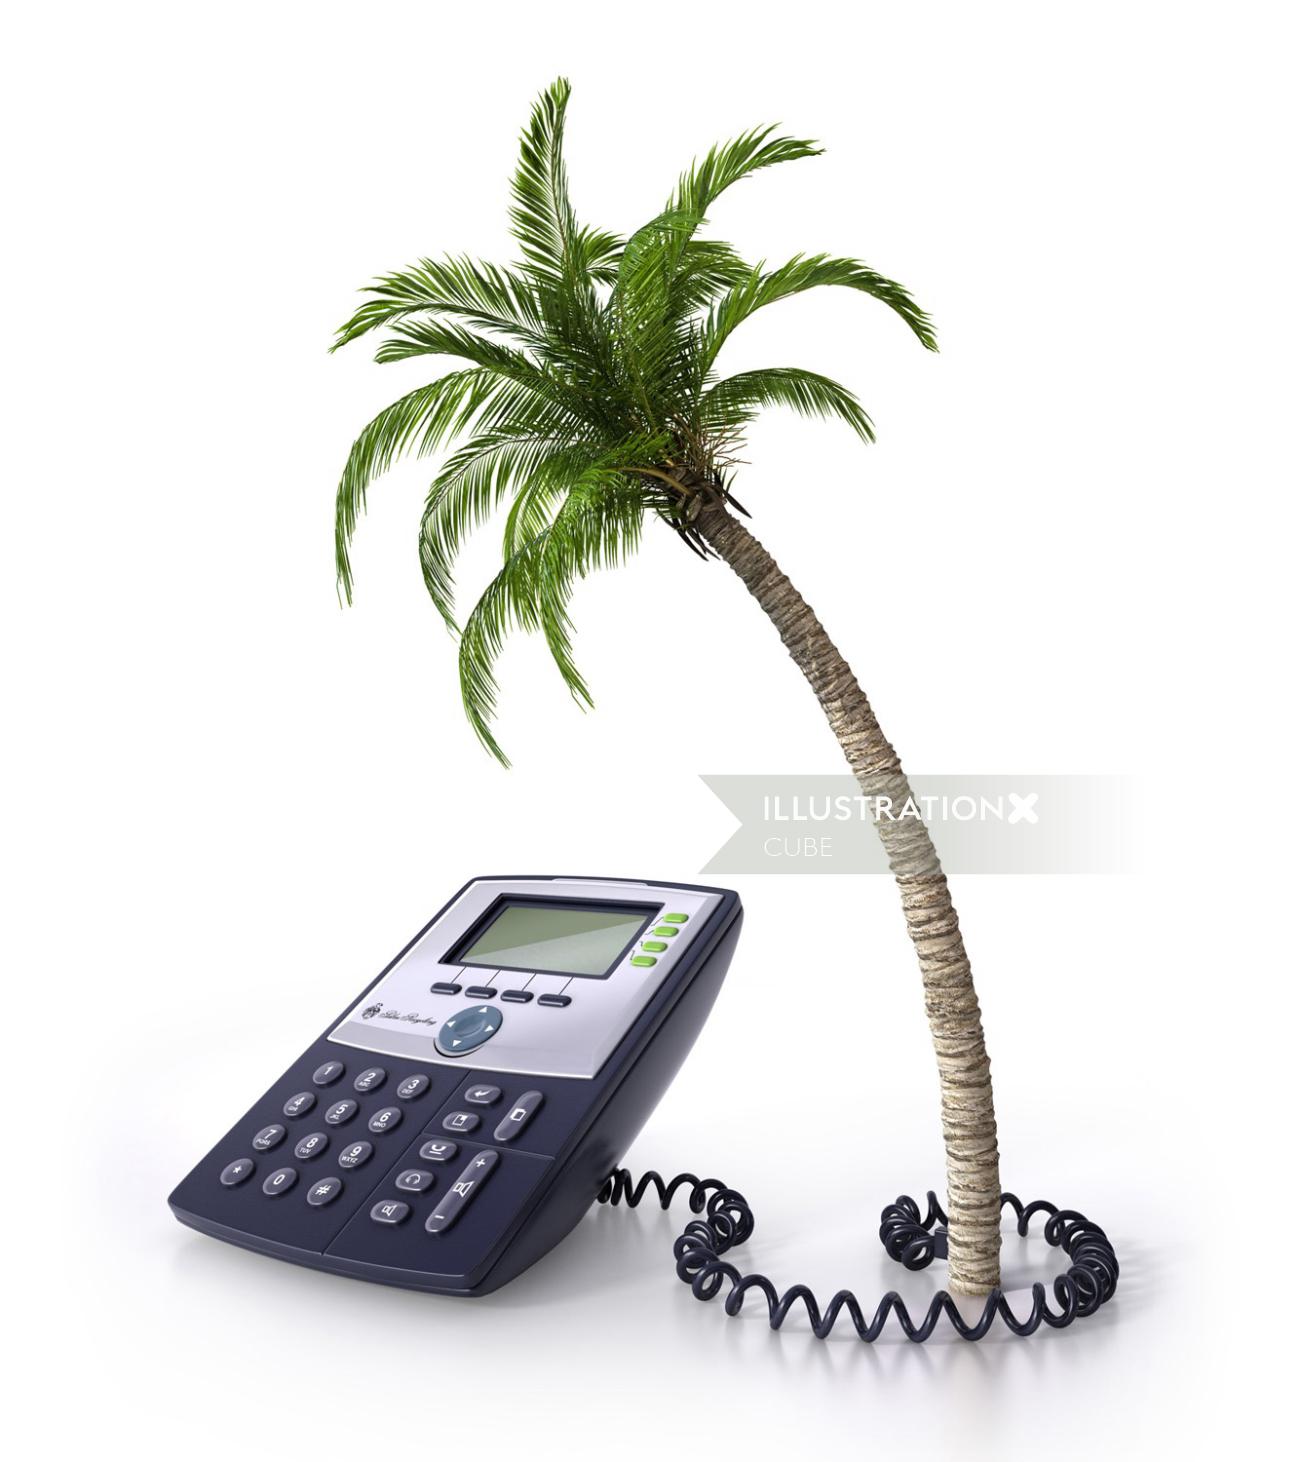 Palm tree and telephone illustration